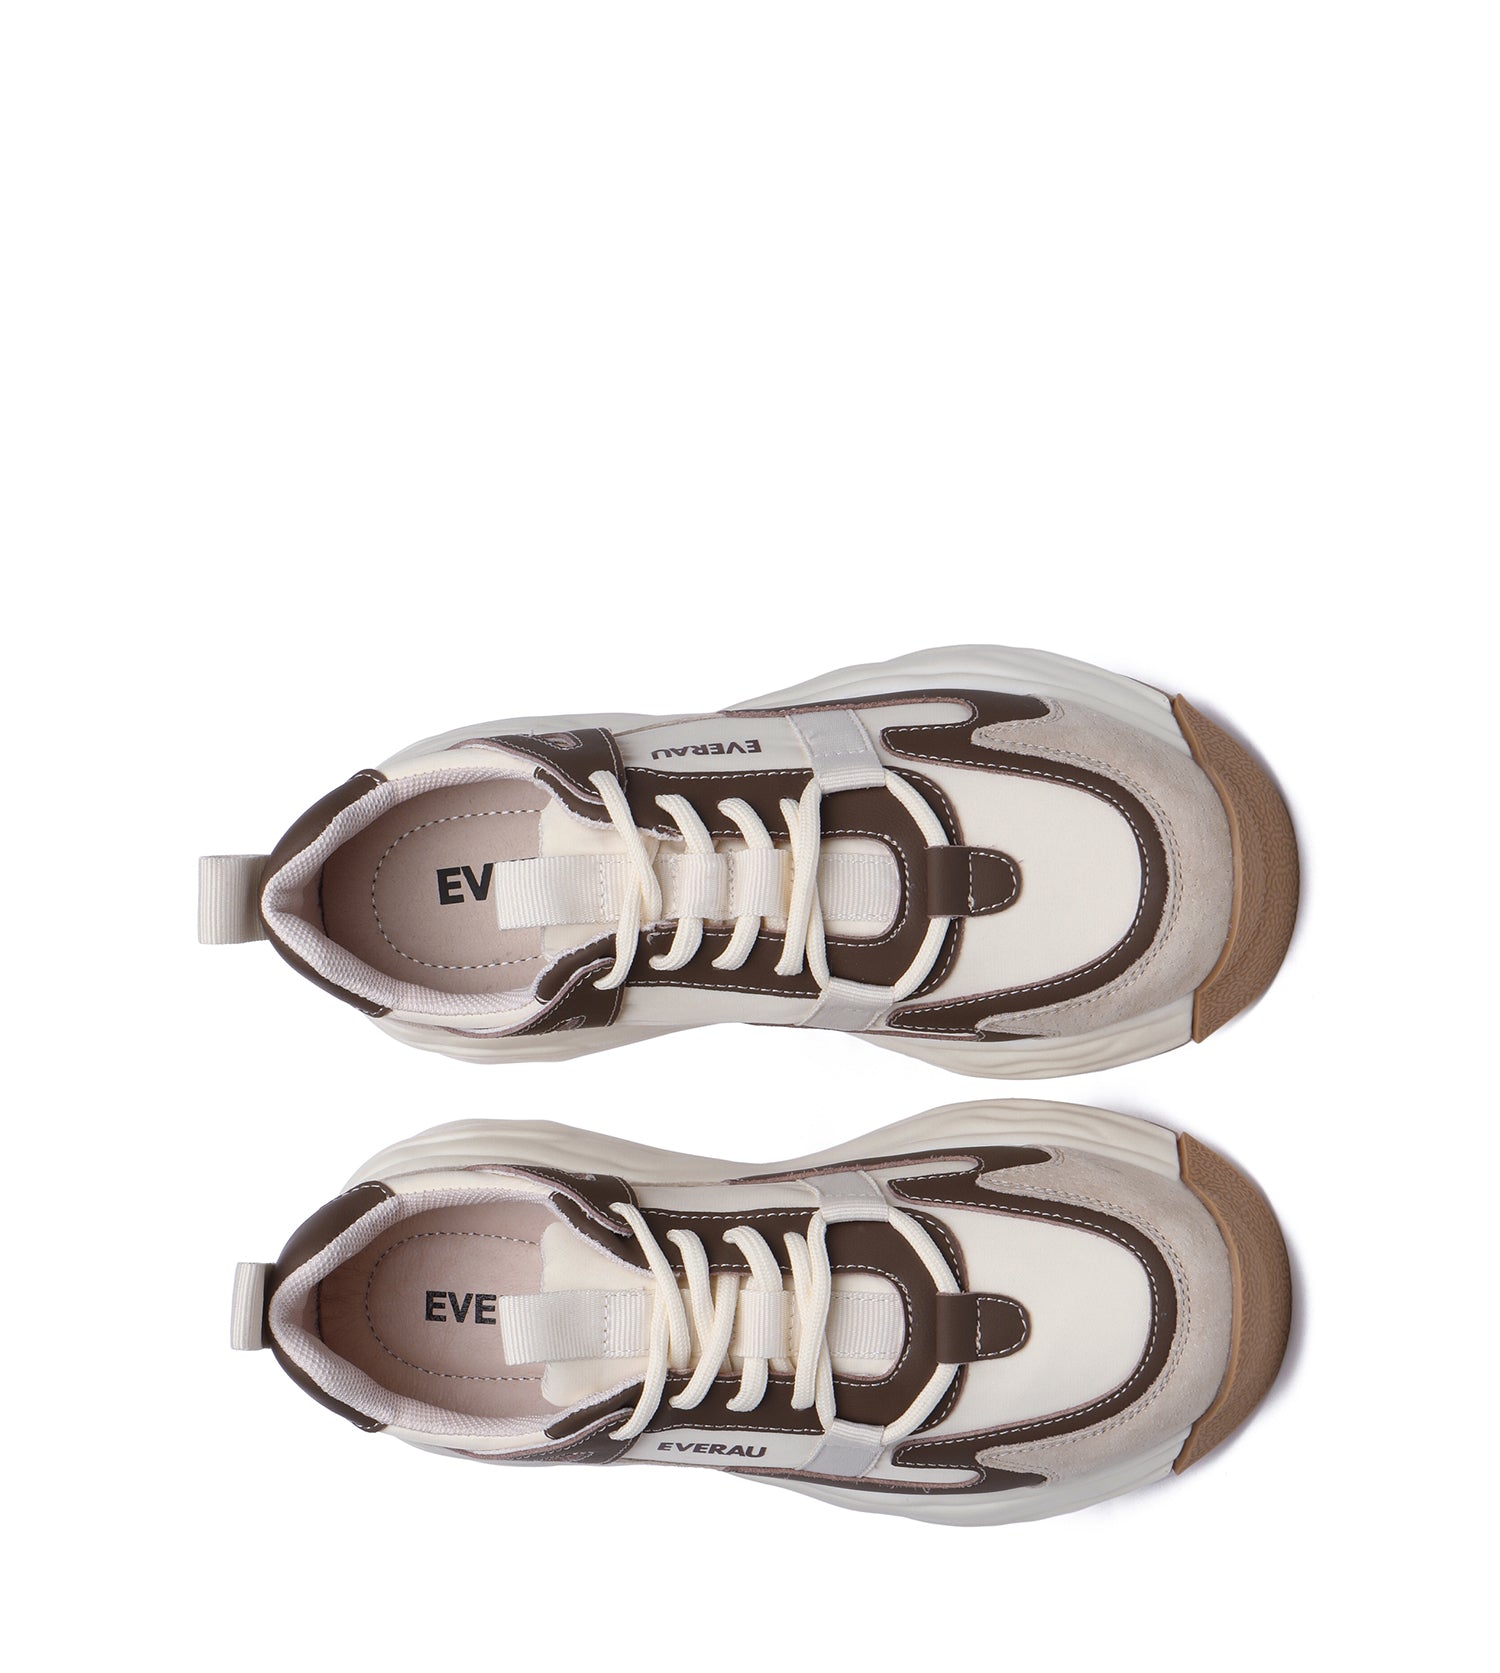 Ellis Casual &amp; Sneaker for Women - EA5031 - EVERAU-Sneakers-PEROZ Accessories